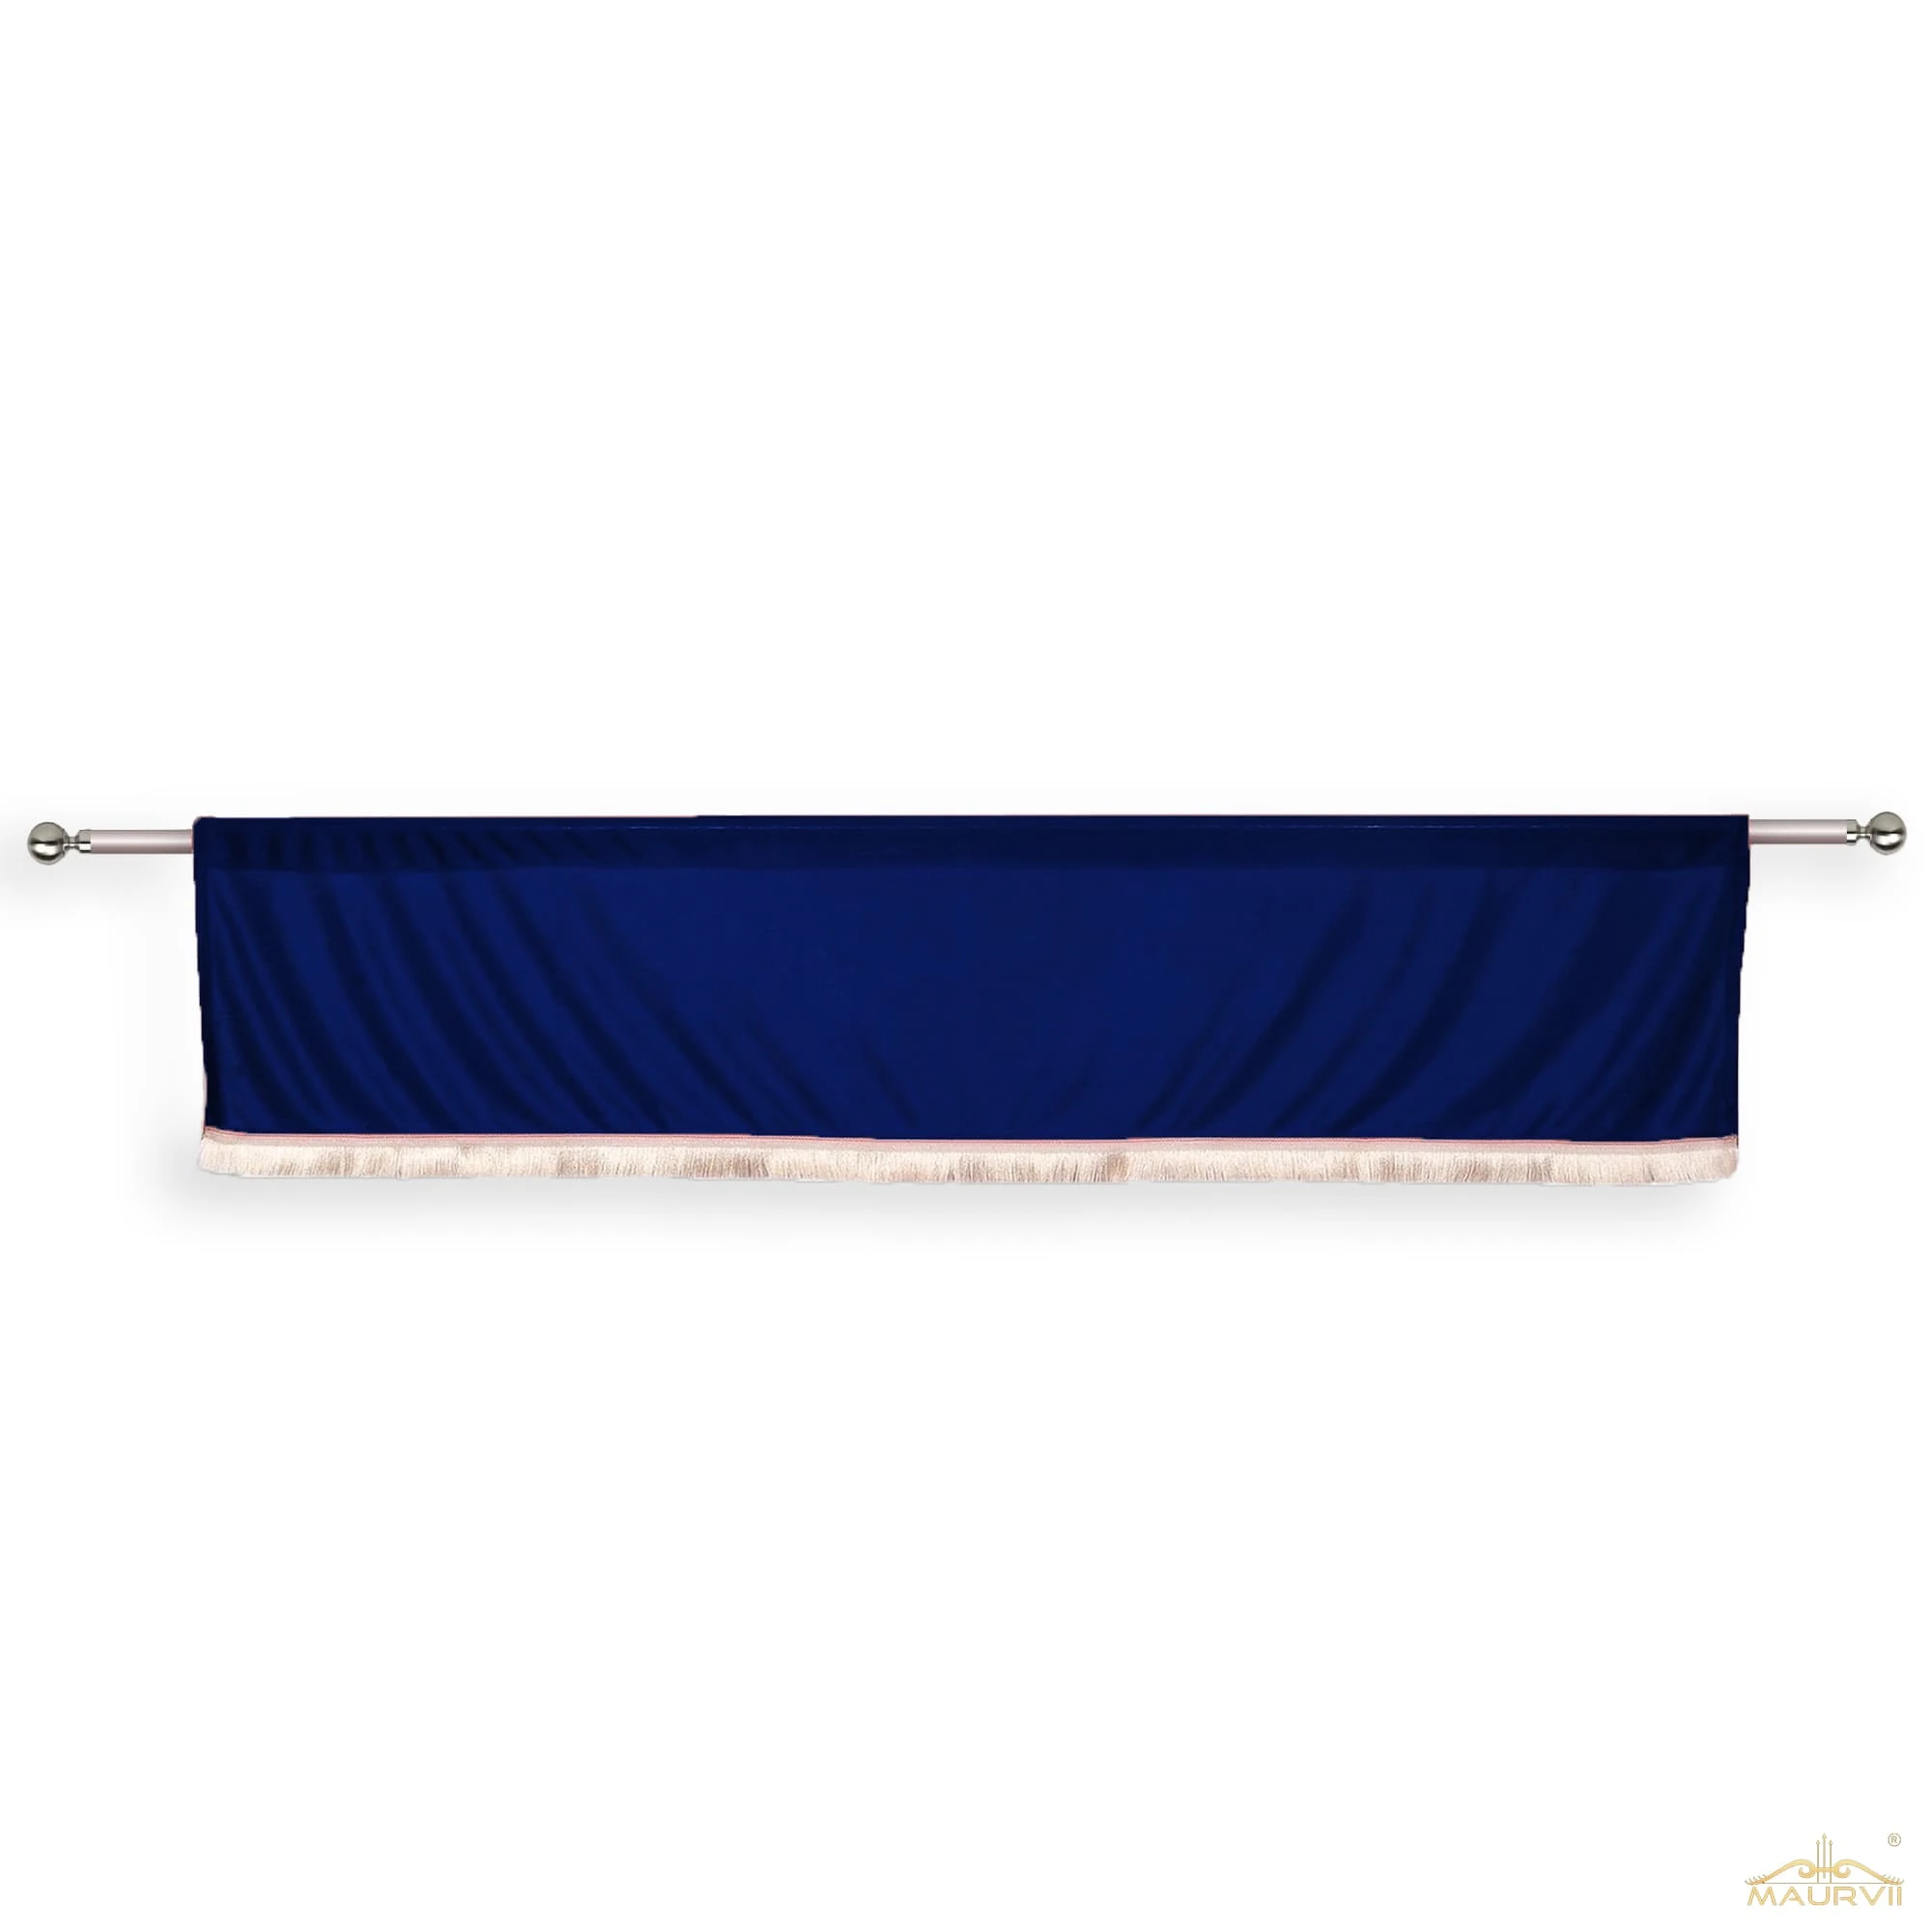 Decorative blue valance curtains